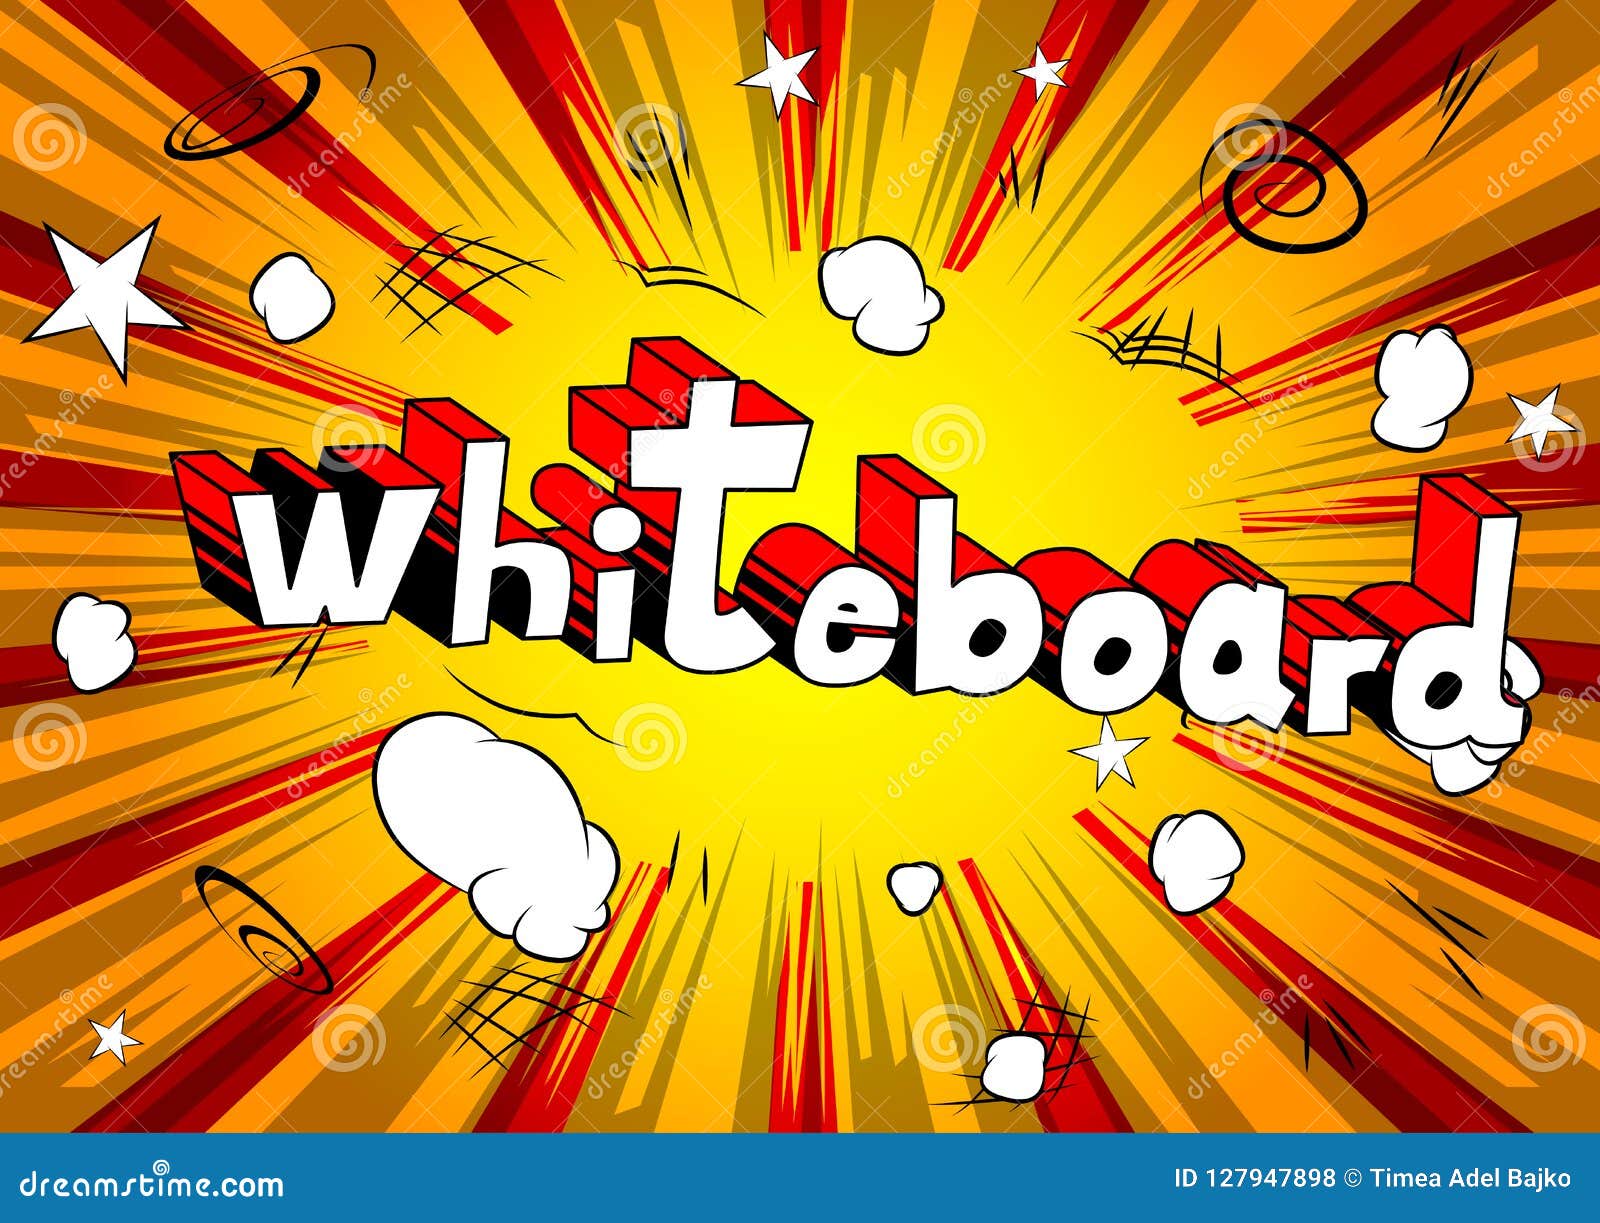 whiteboard - comic book style word